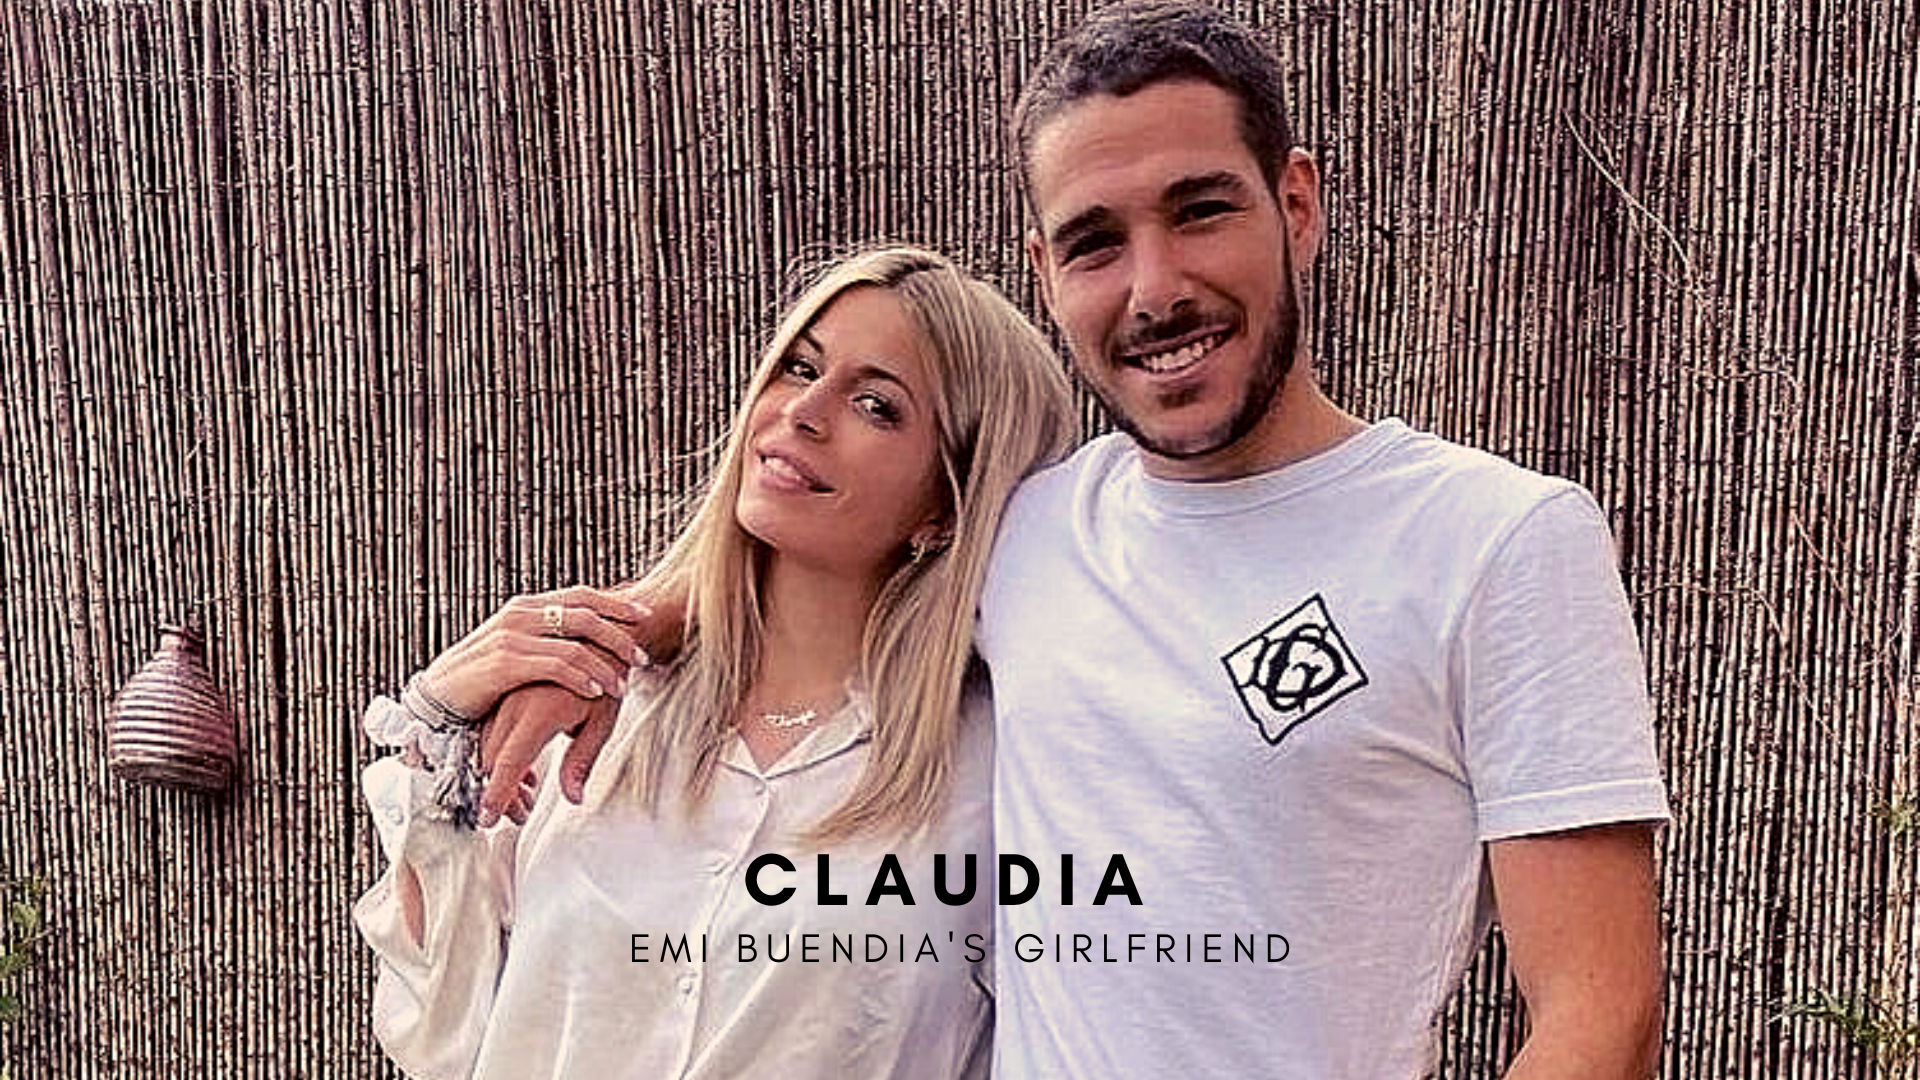 Emi Buendia with his girlfriend Claudia. (Credit: Instagram)